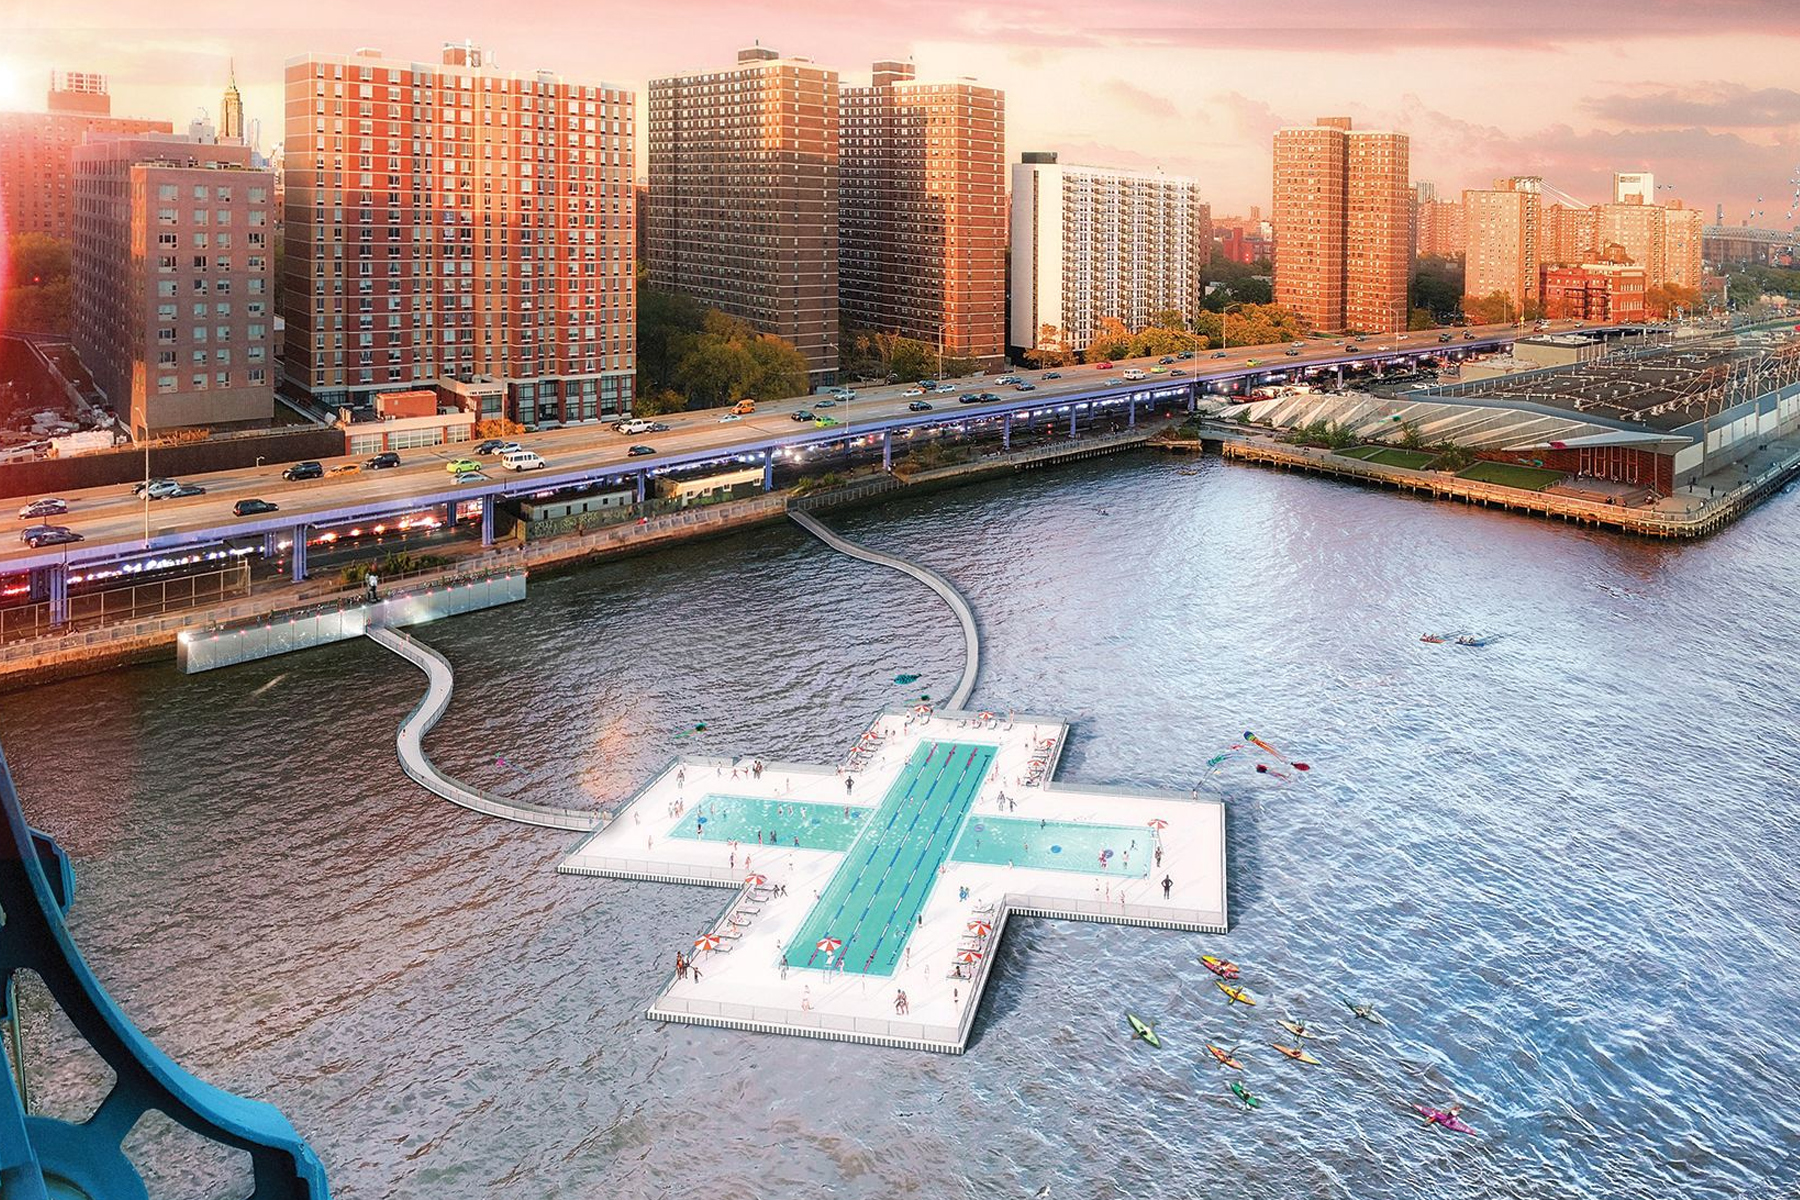 New York piscina galleggiante fiume grattacieli +POOL